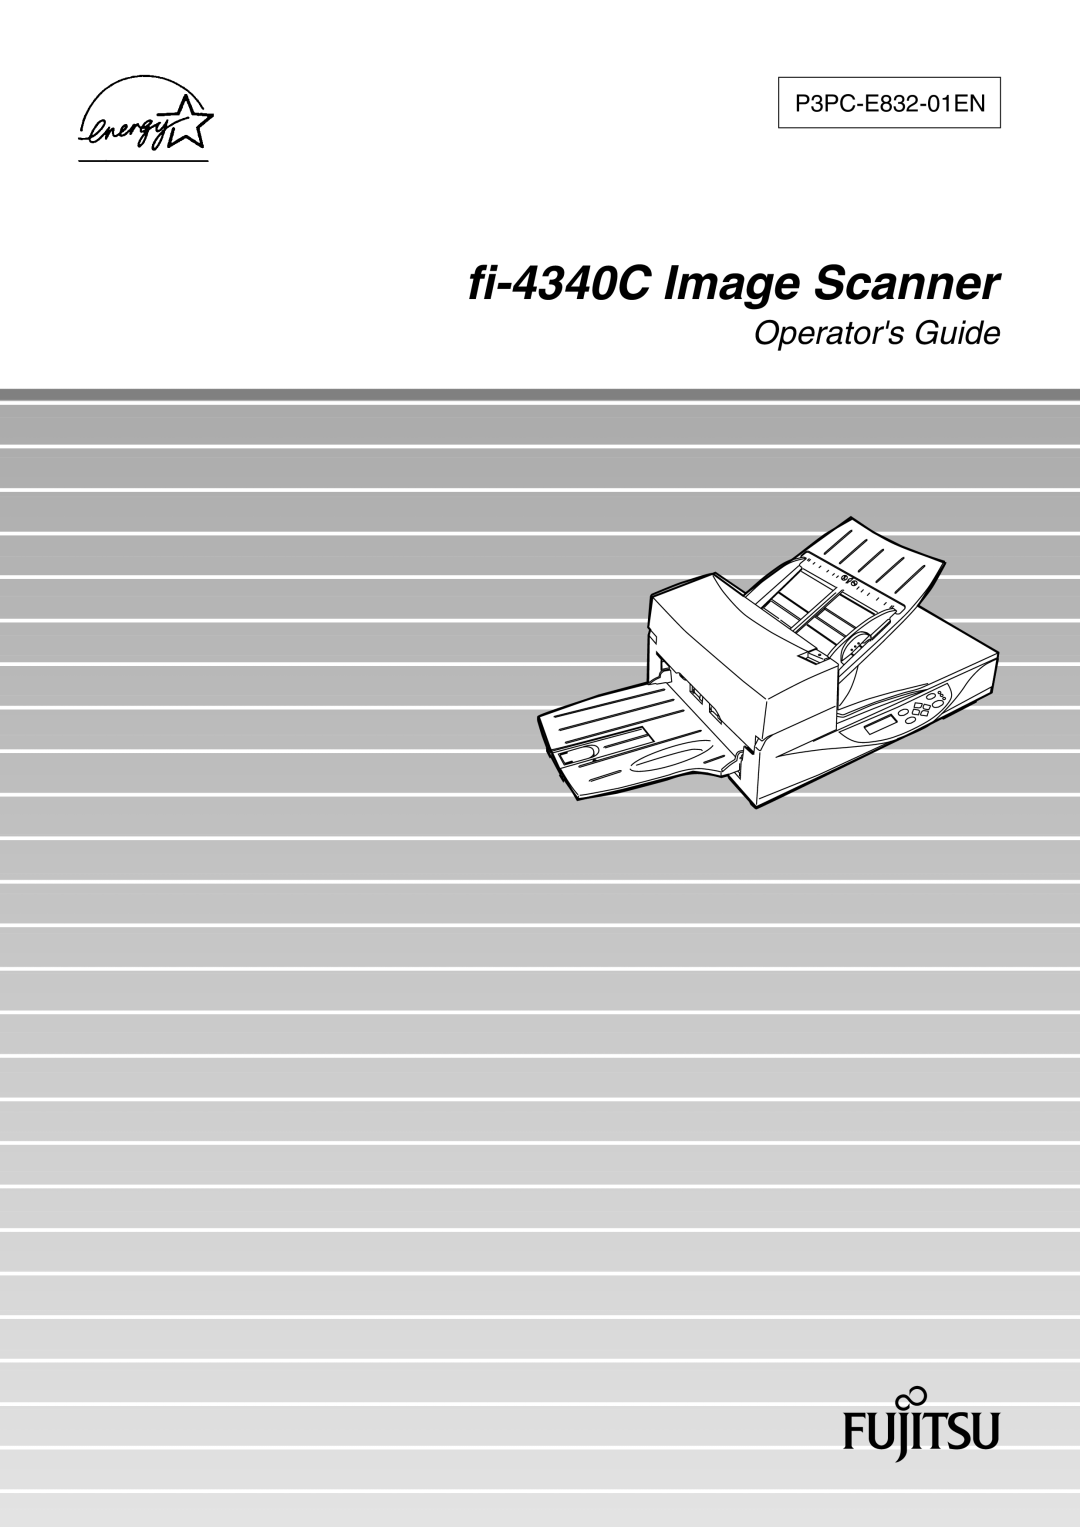 Fujitsu manual fi-4340C Image Scanner, Operators Guide, P3PC-E832-01EN 